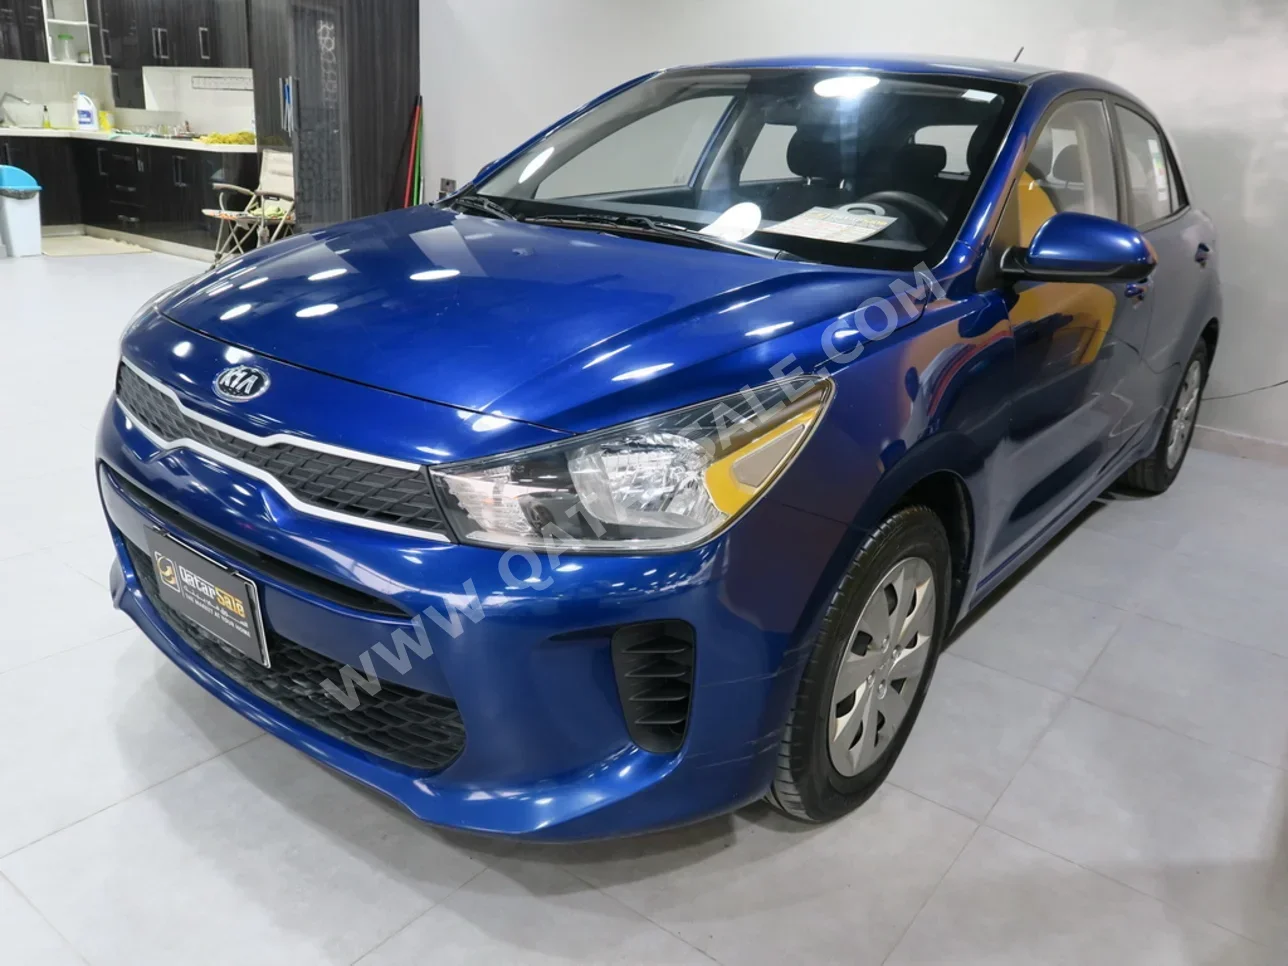 Kia  Rio  2018  Automatic  132,149 Km  4 Cylinder  Front Wheel Drive (FWD)  Sedan  Blue